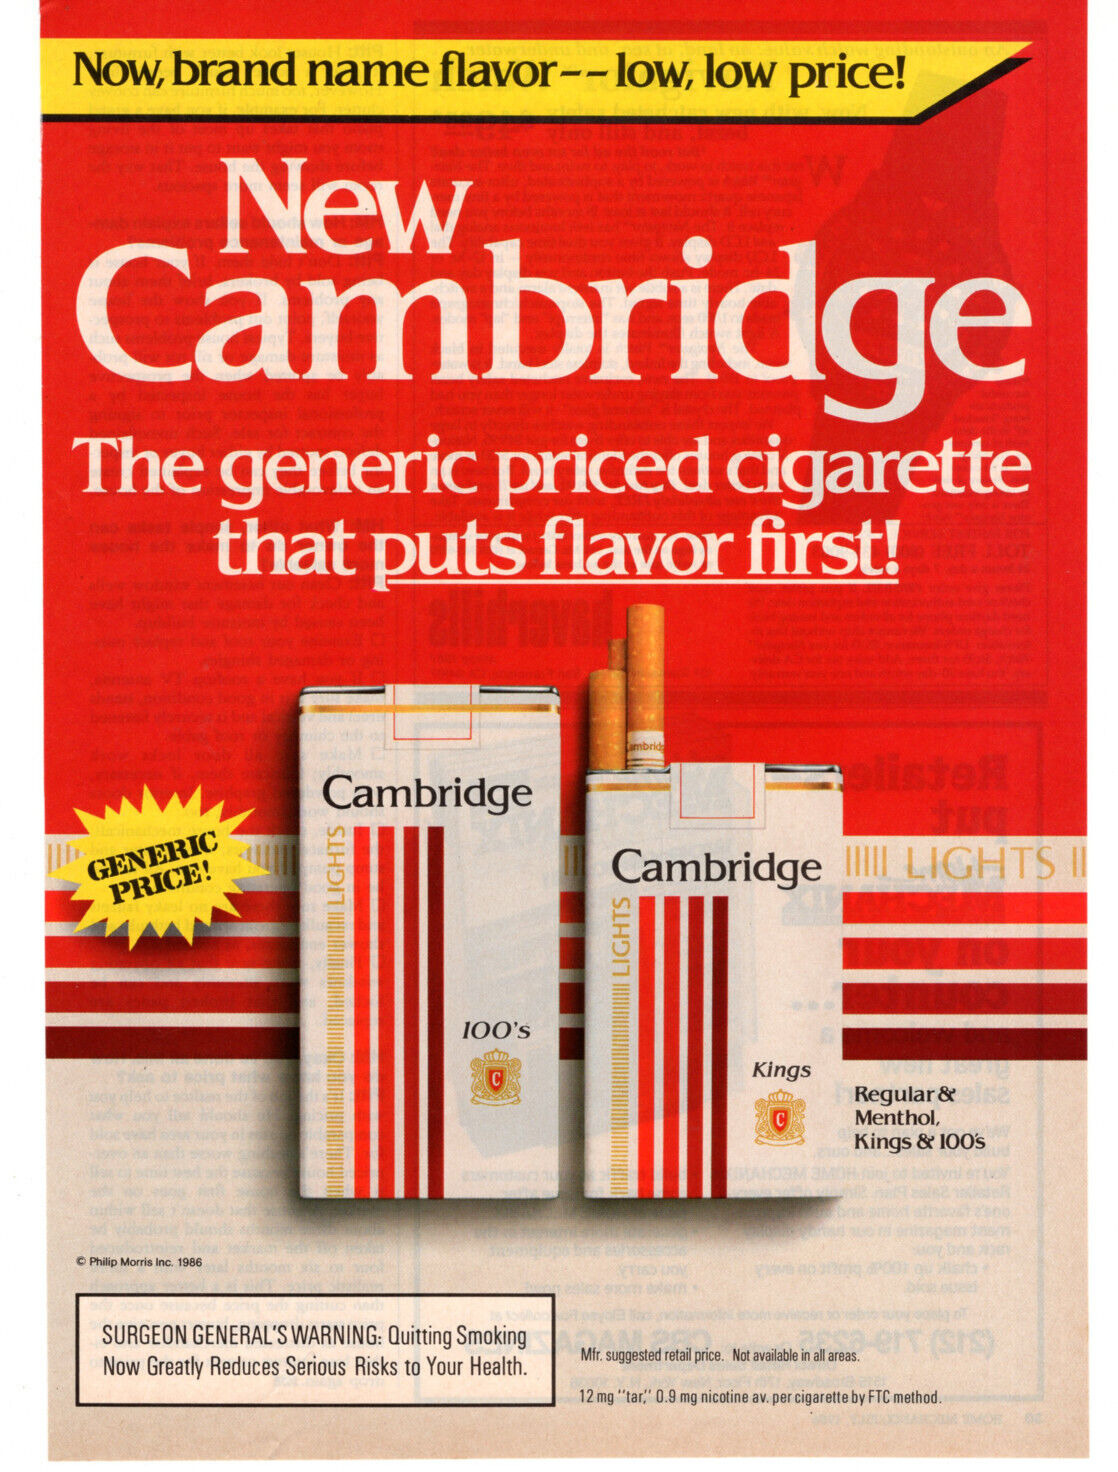 Cambridge Cigarettes Smoking 1986 Vintage Print Ad Original Man Cave Bar Decor